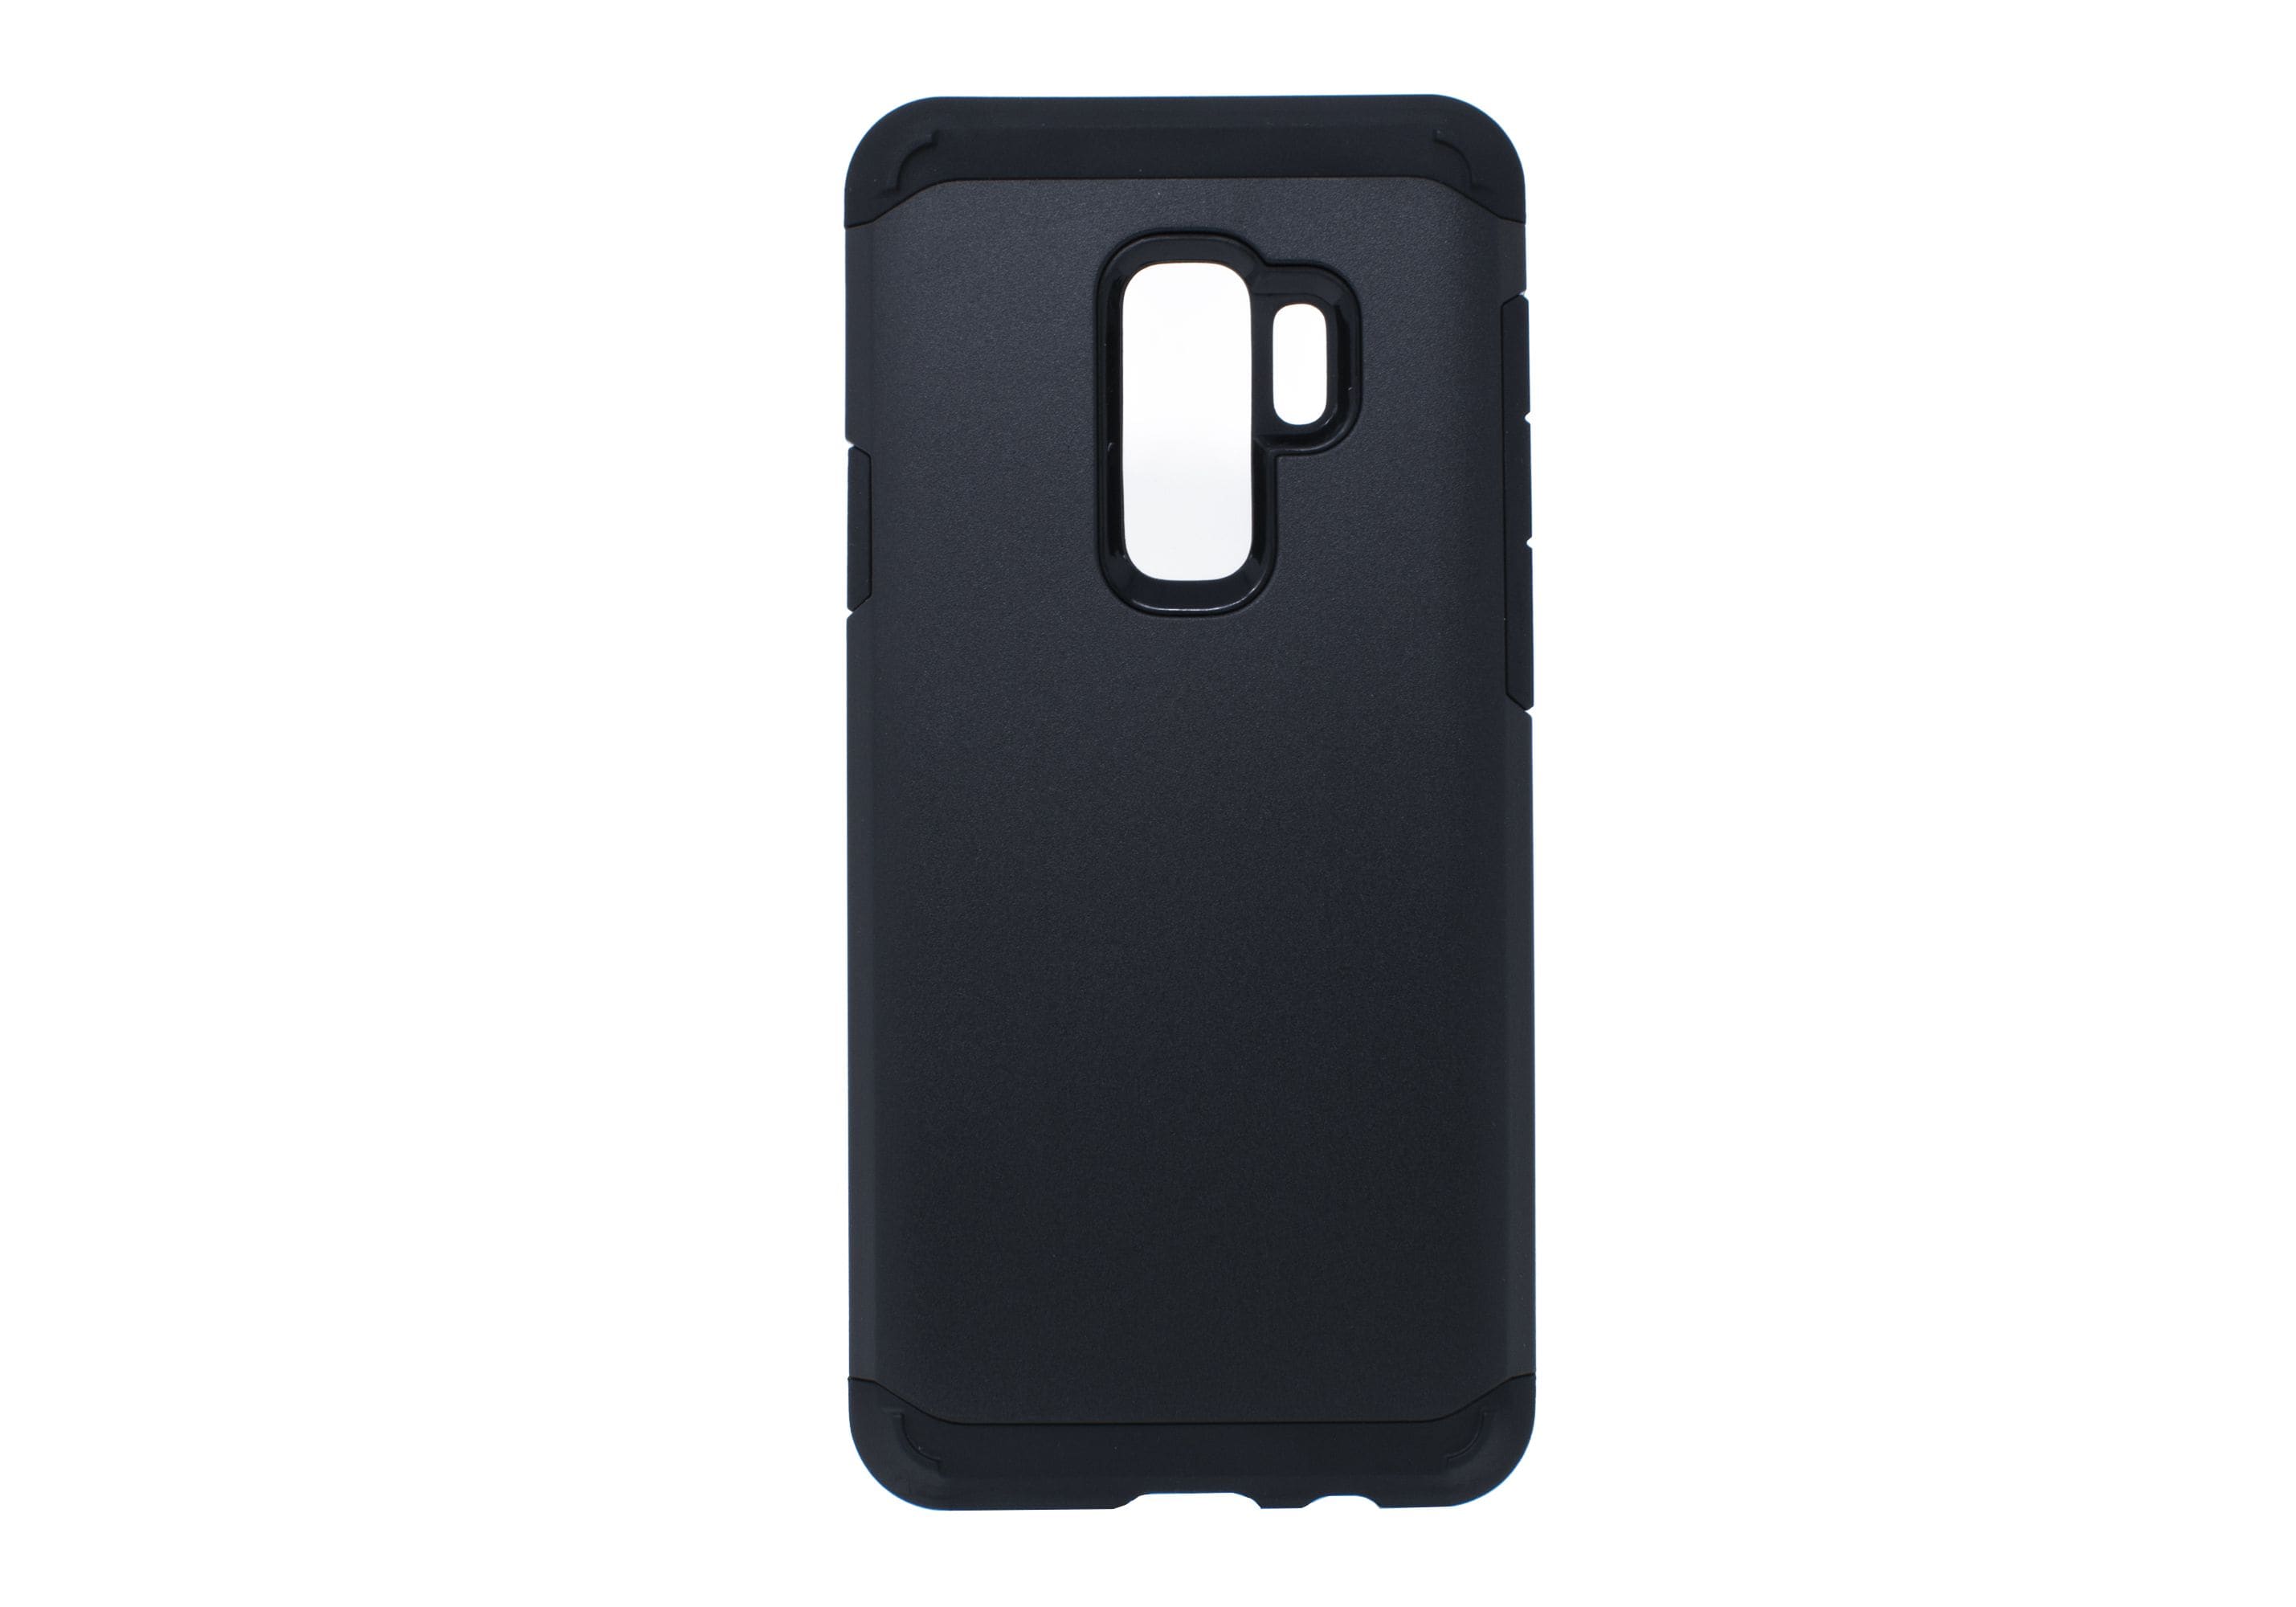 Samsung Galaxy S9 Plus Black and Dark Grey Shield Case